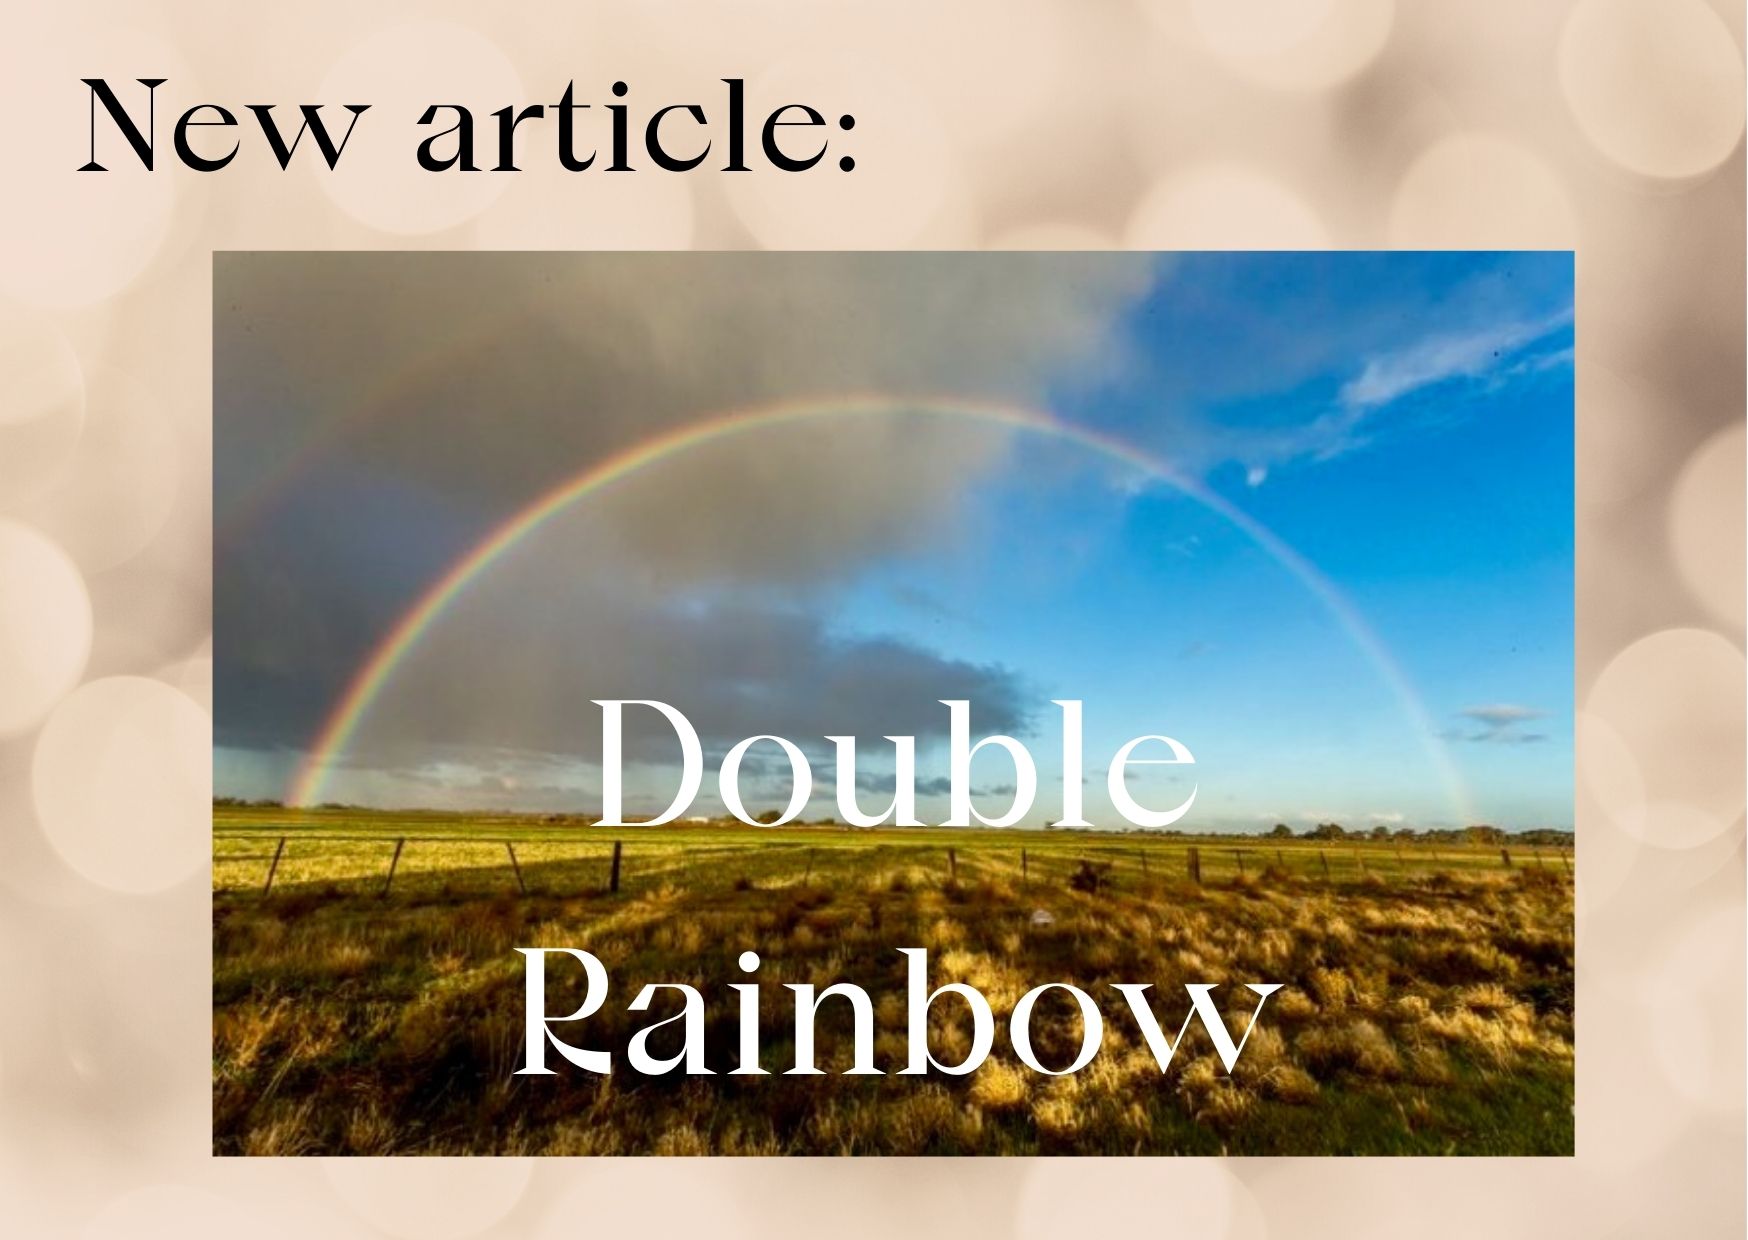 An image of a double rainbow